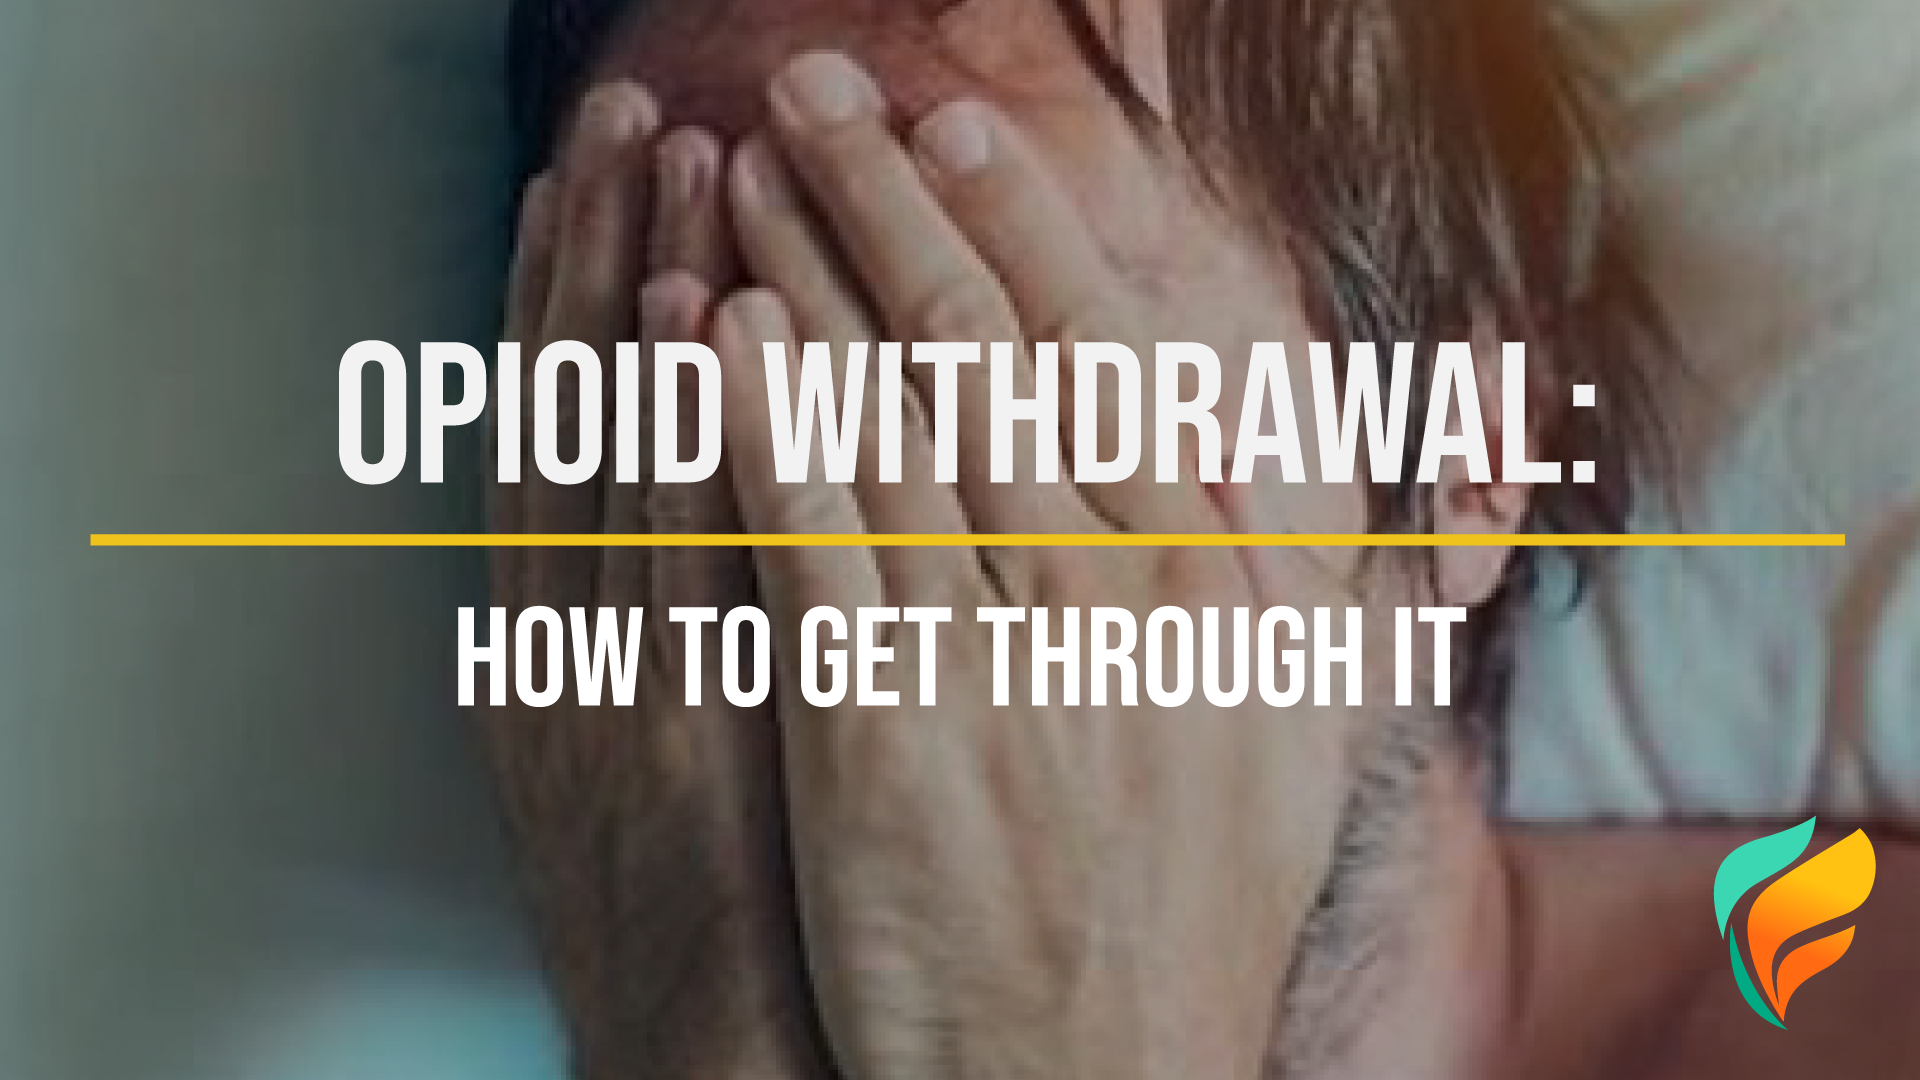 What is opioid withdrawal like?